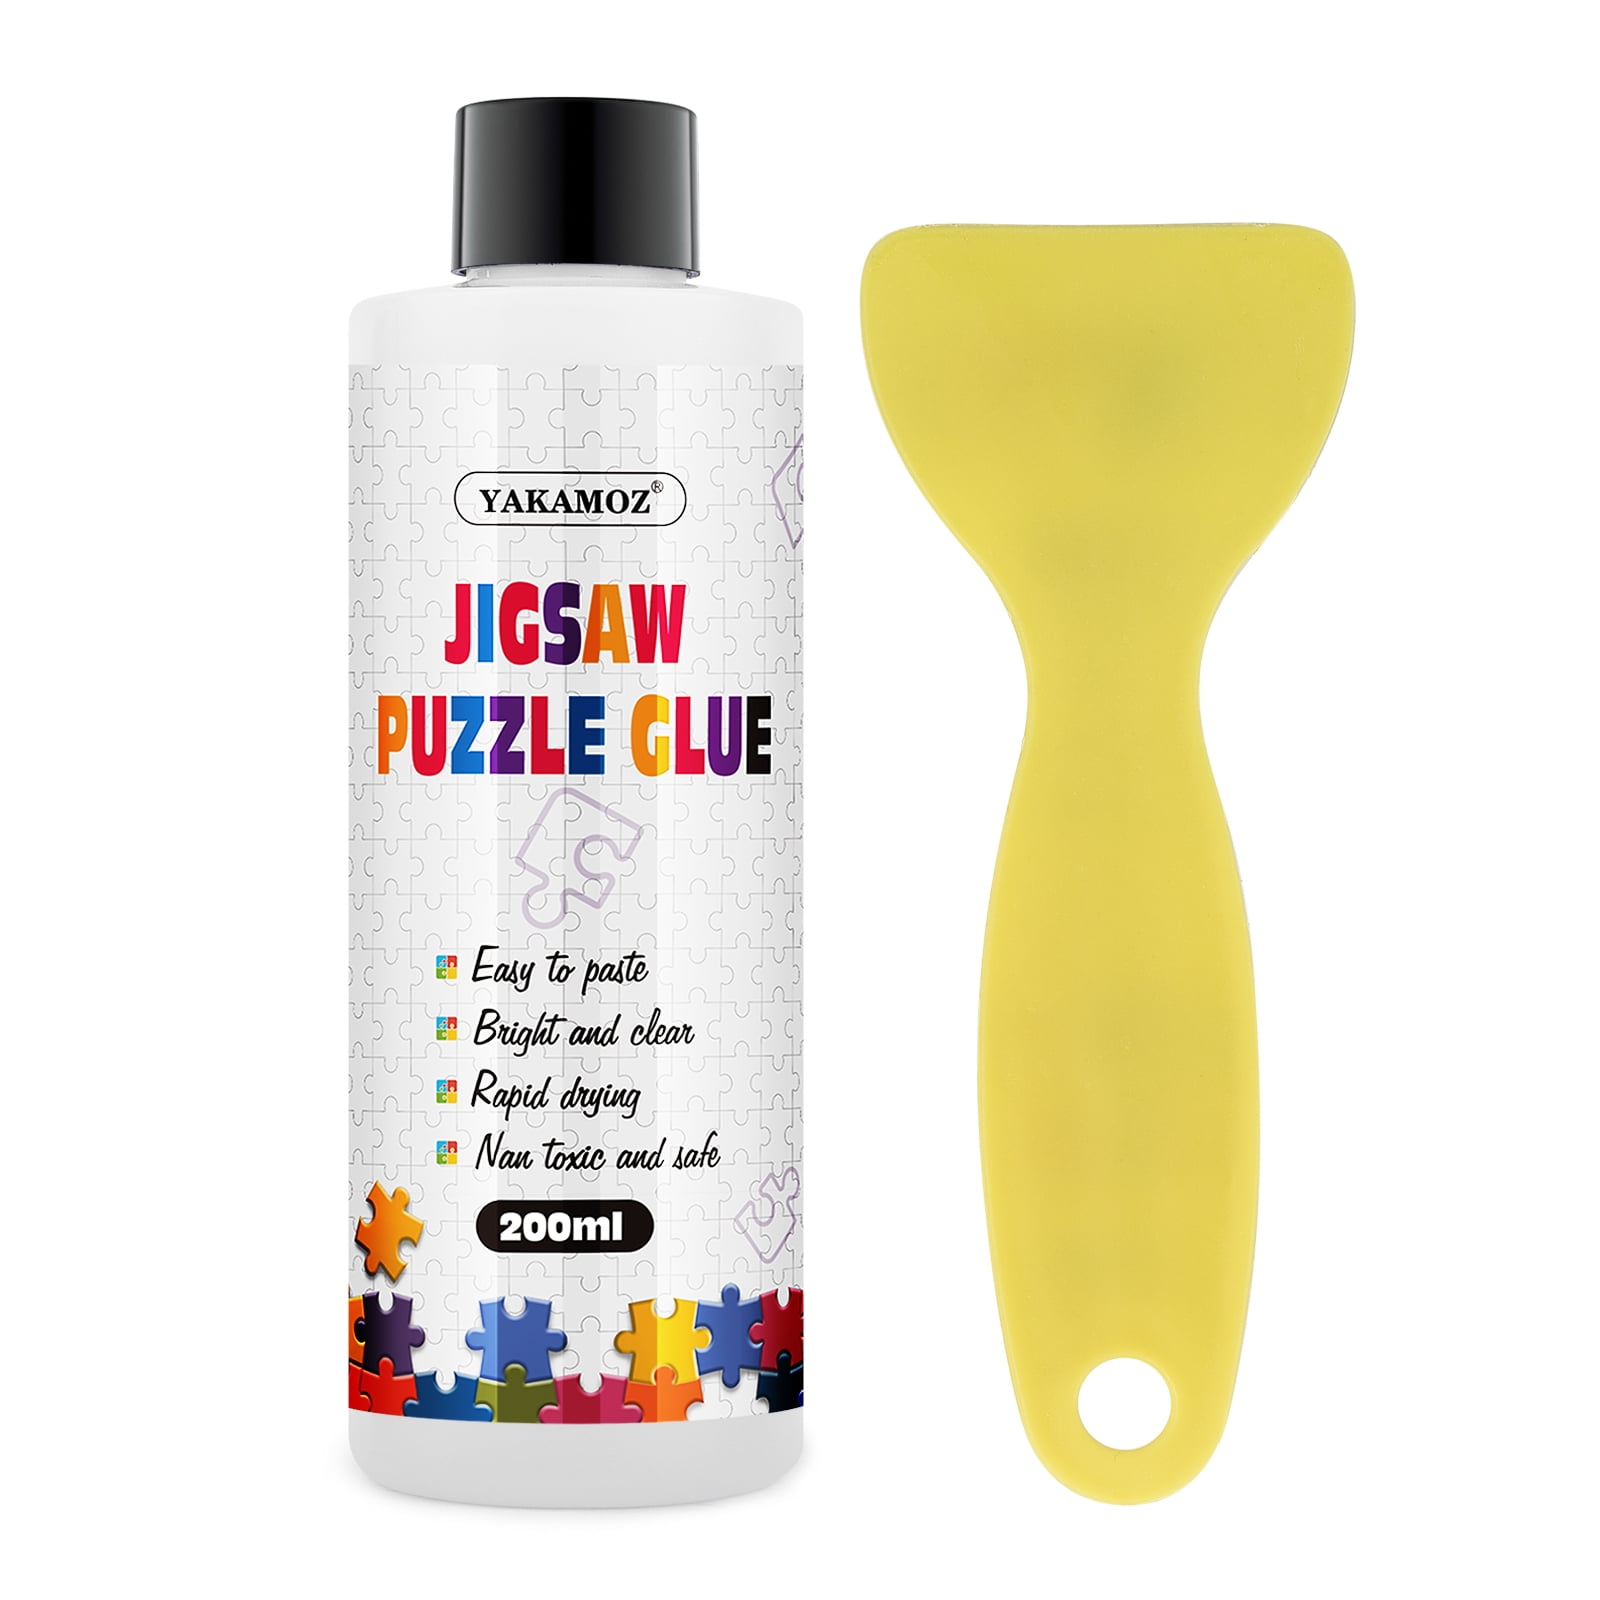 Jigsaw Puzzle Fixative Glue - All Jigsaw Puzzles